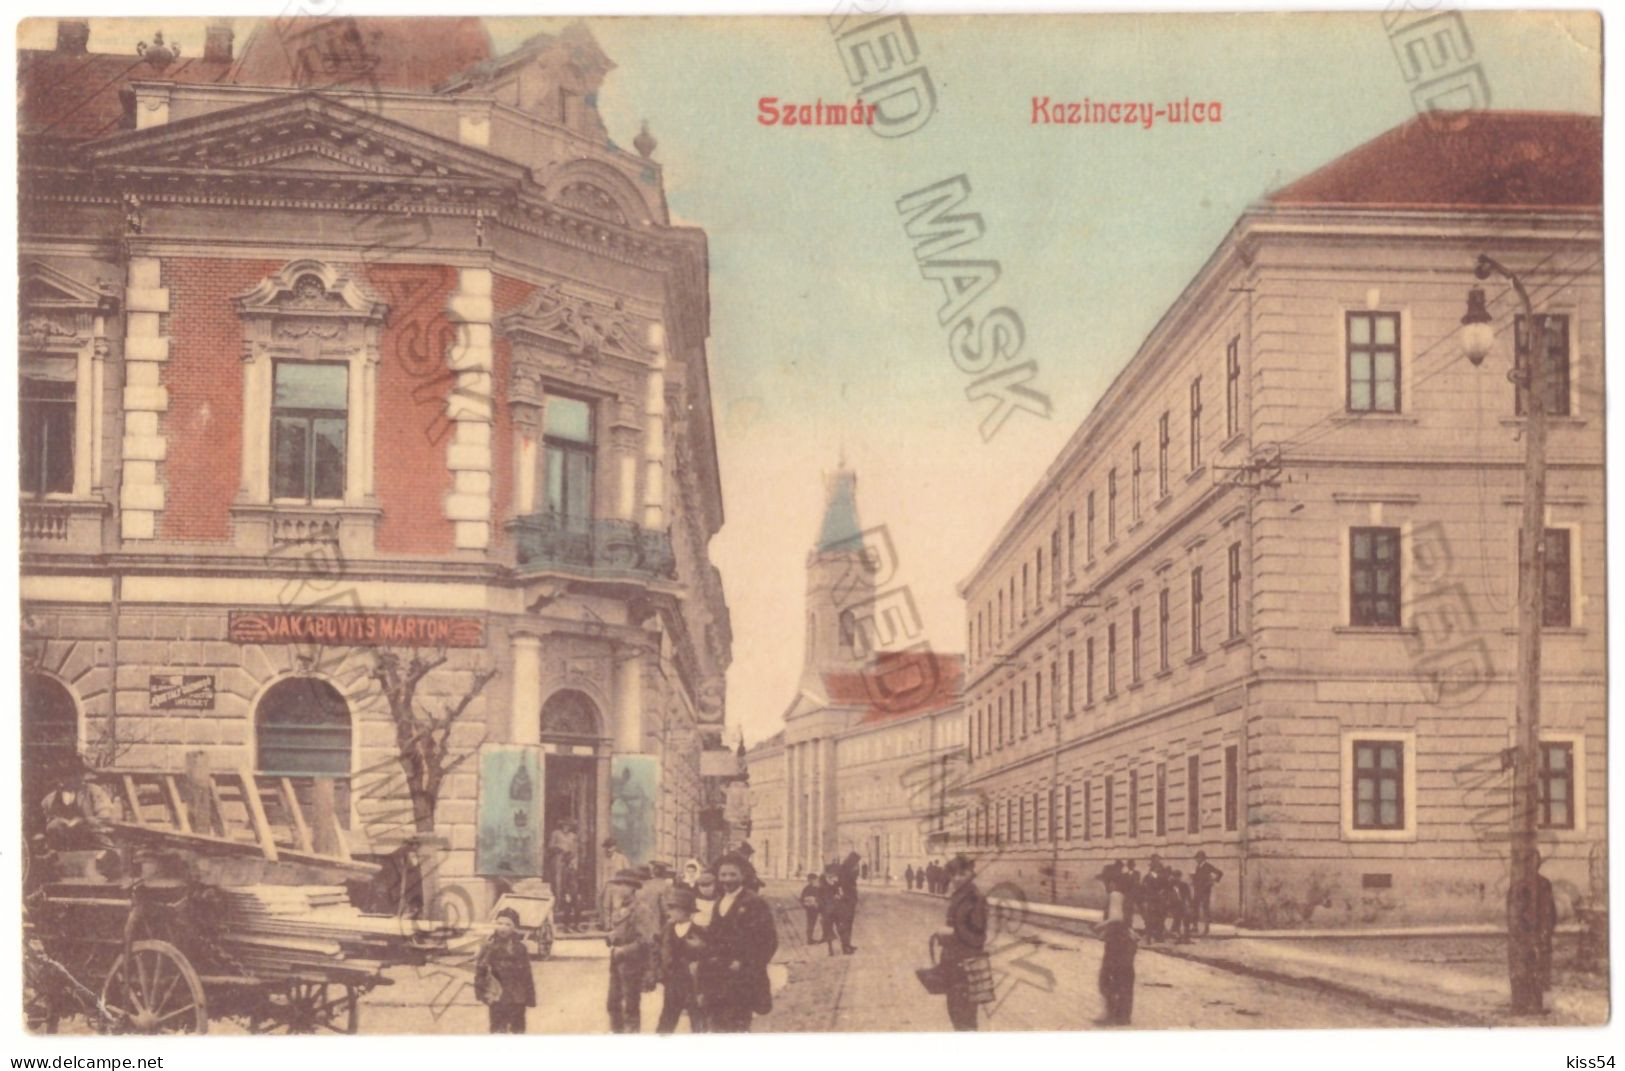 RO 91 - 25564 SATU MARE, Maramures, Market, Romania - Old Postcard - Used - 1908 - Roumanie